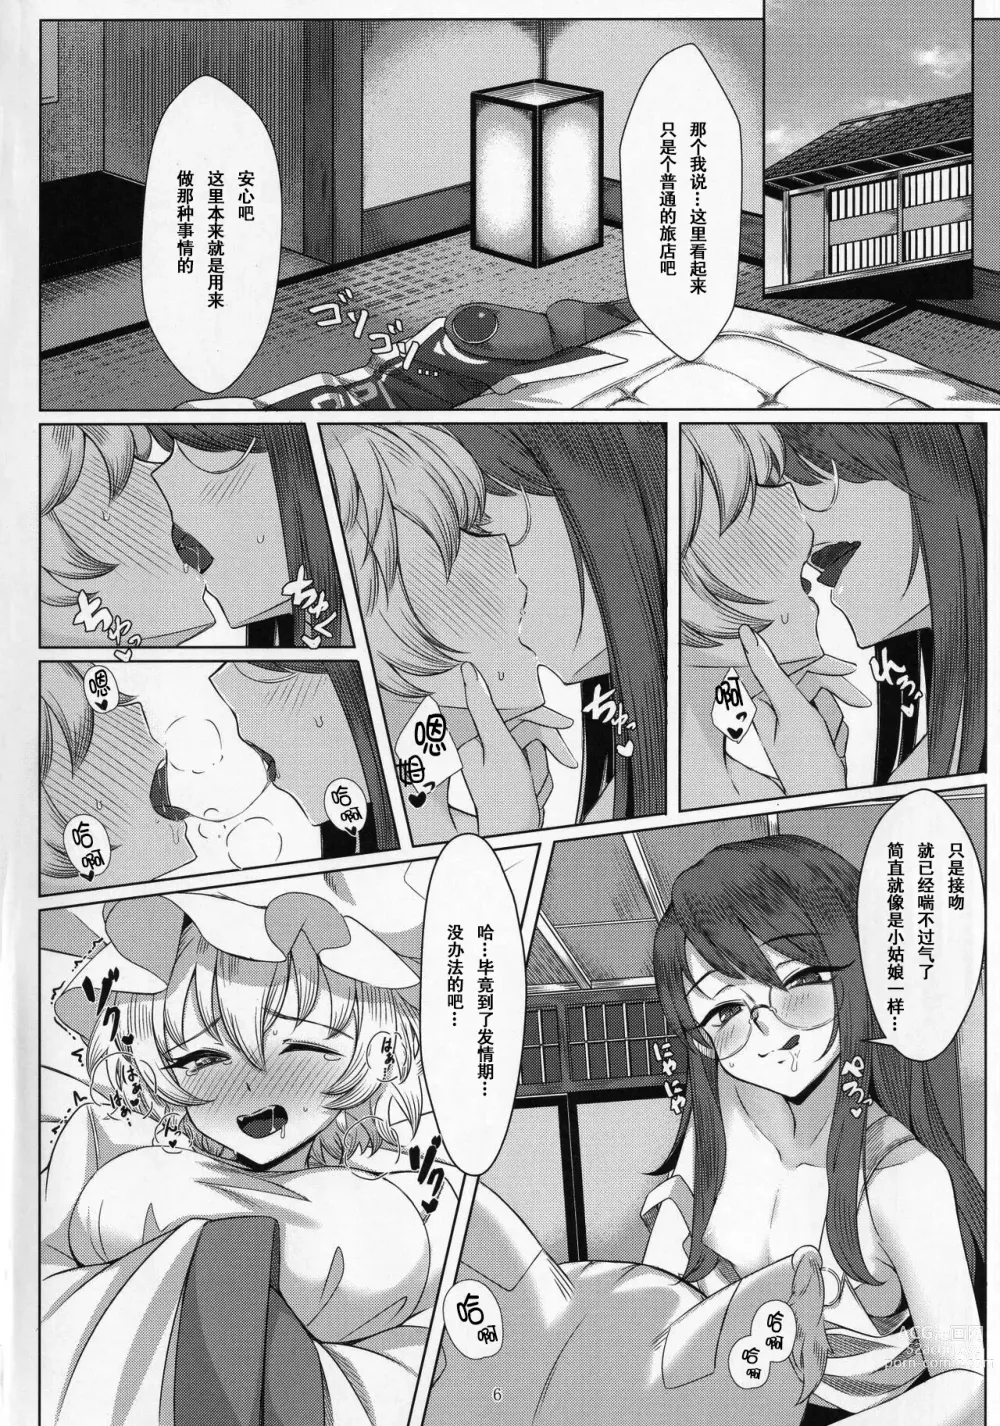 Page 5 of doujinshi 发情狐狸与扶她狸子